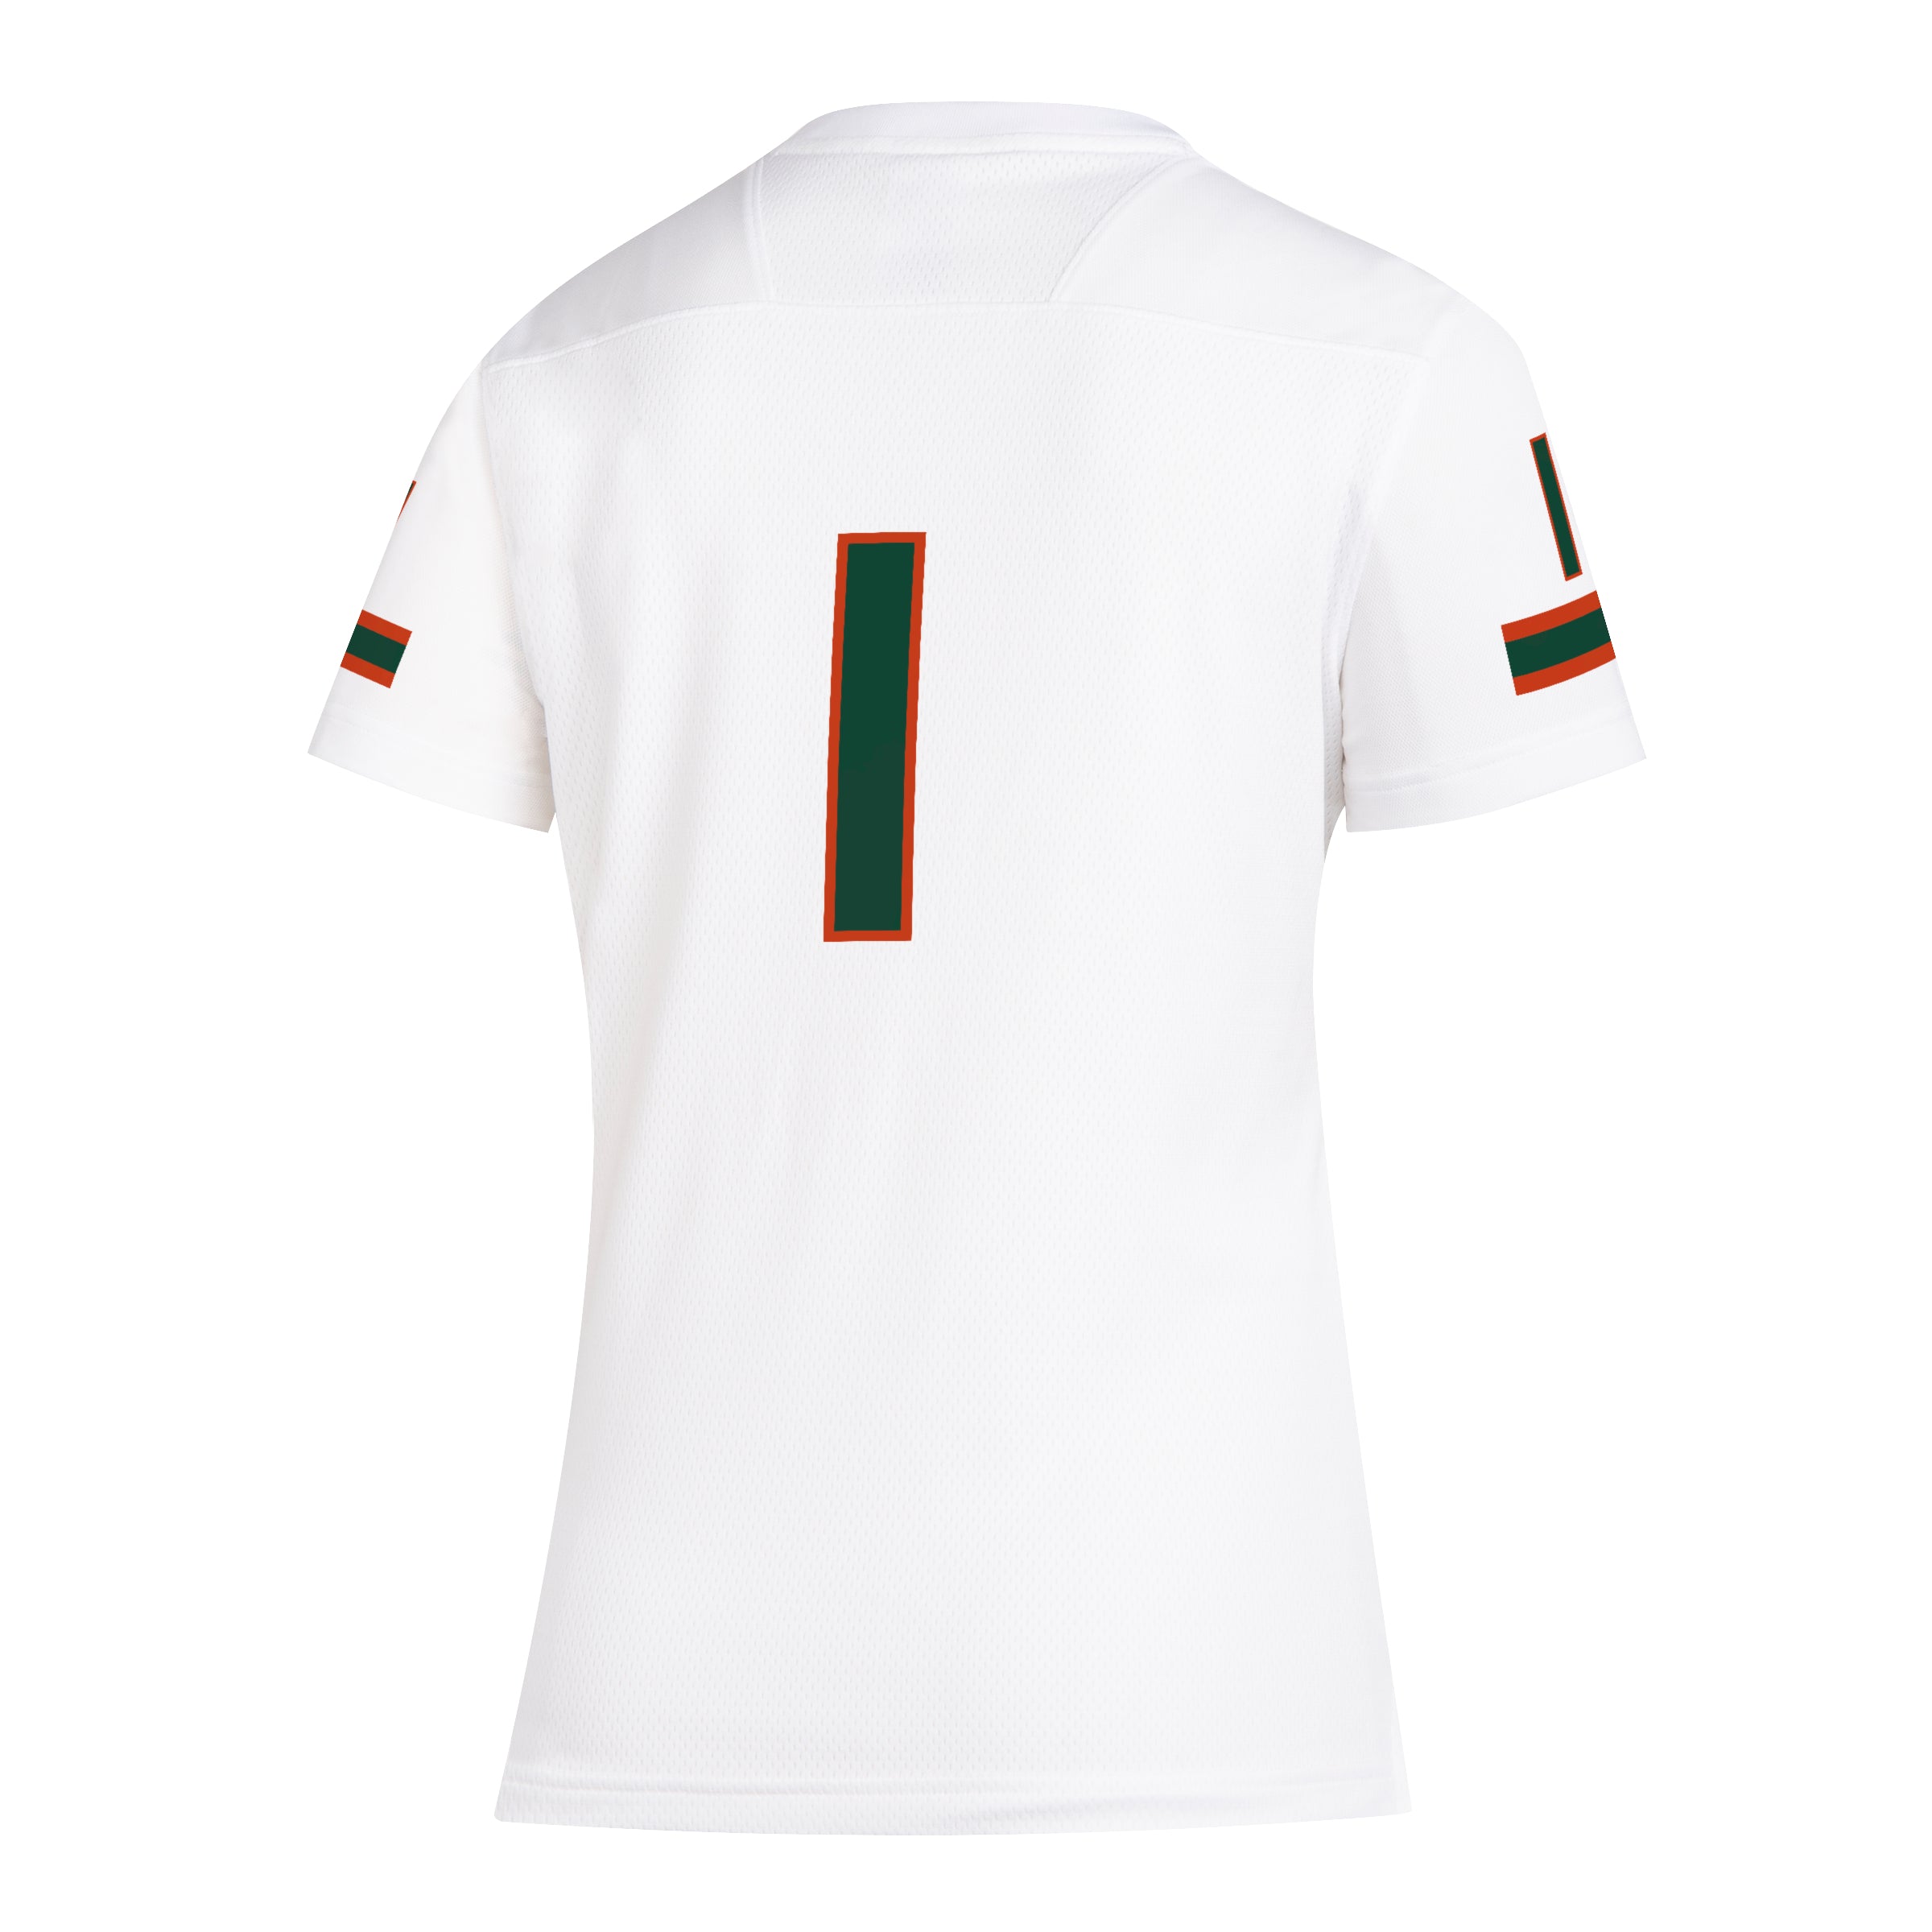 Miami Hurricanes adidas Women's Replica Jersey - White